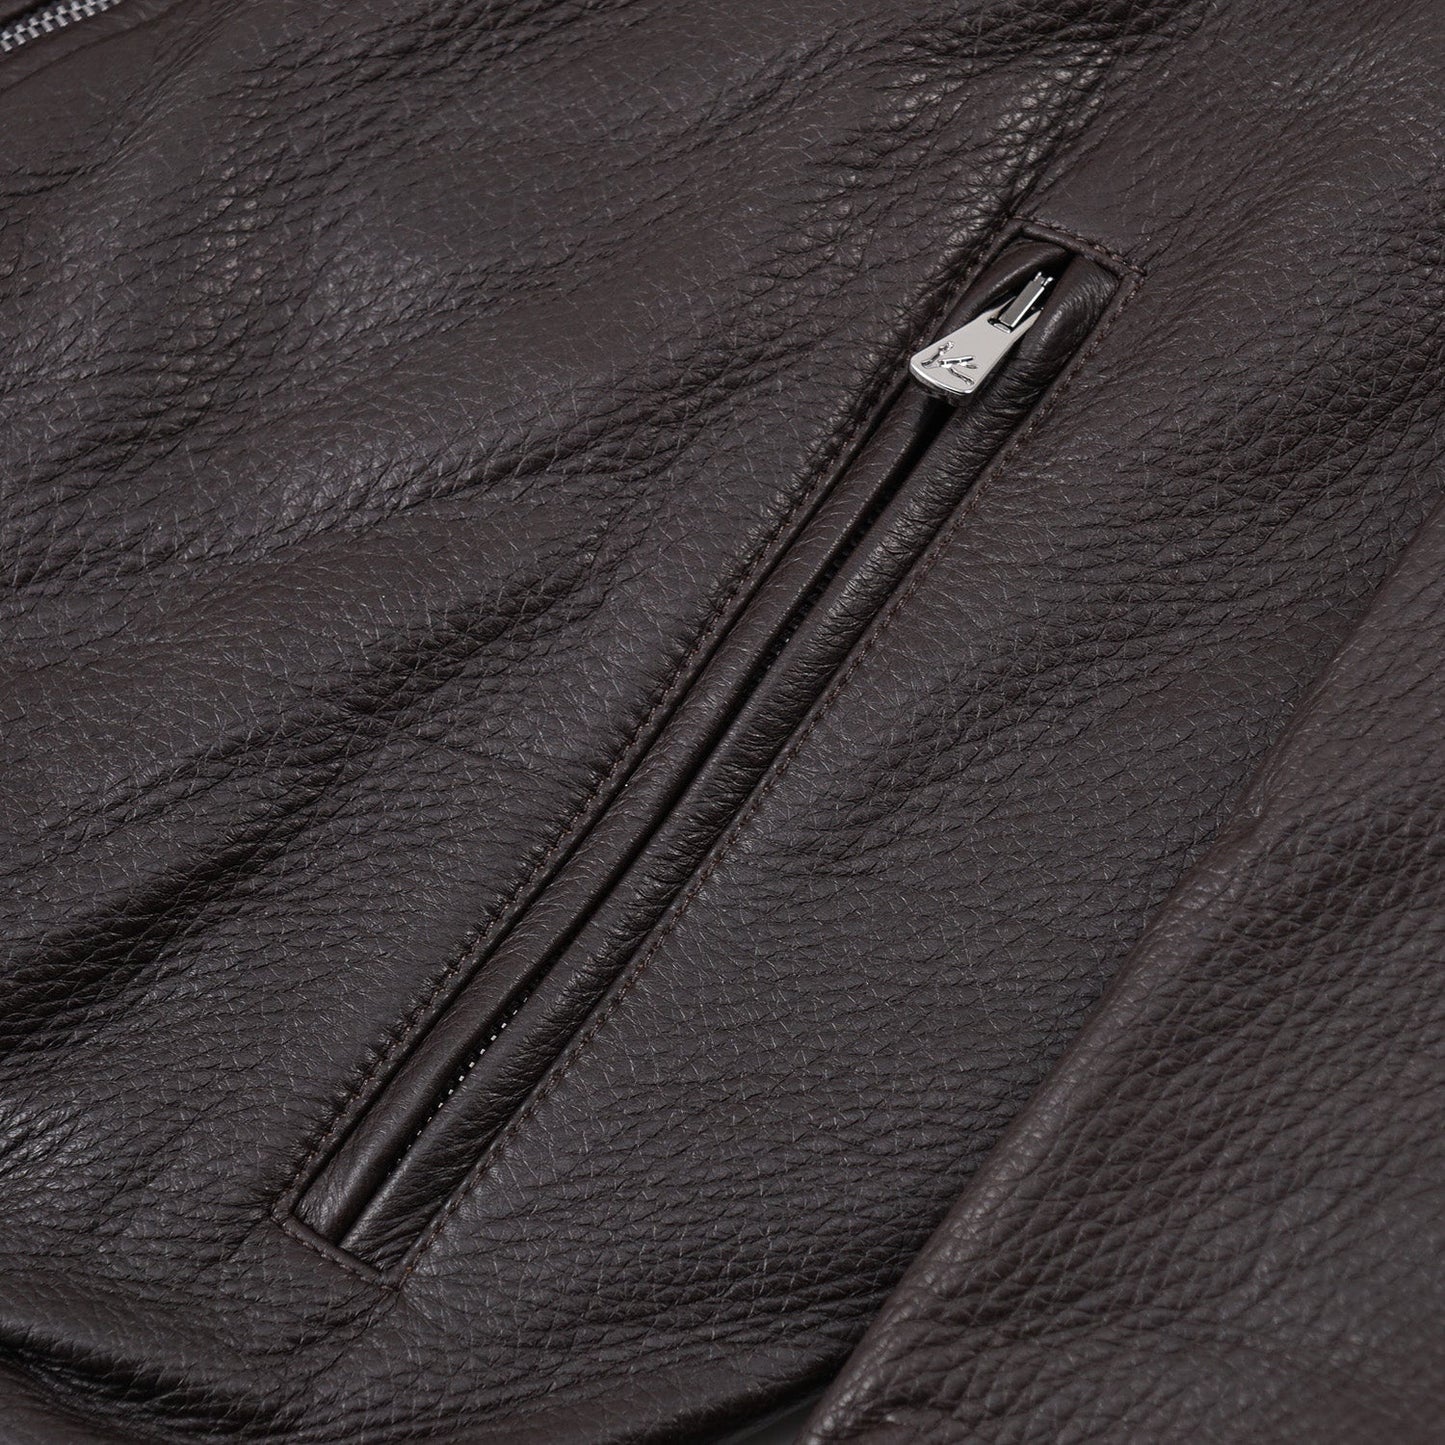 Isaia Deerskin Leather Bomber Jacket - Top Shelf Apparel